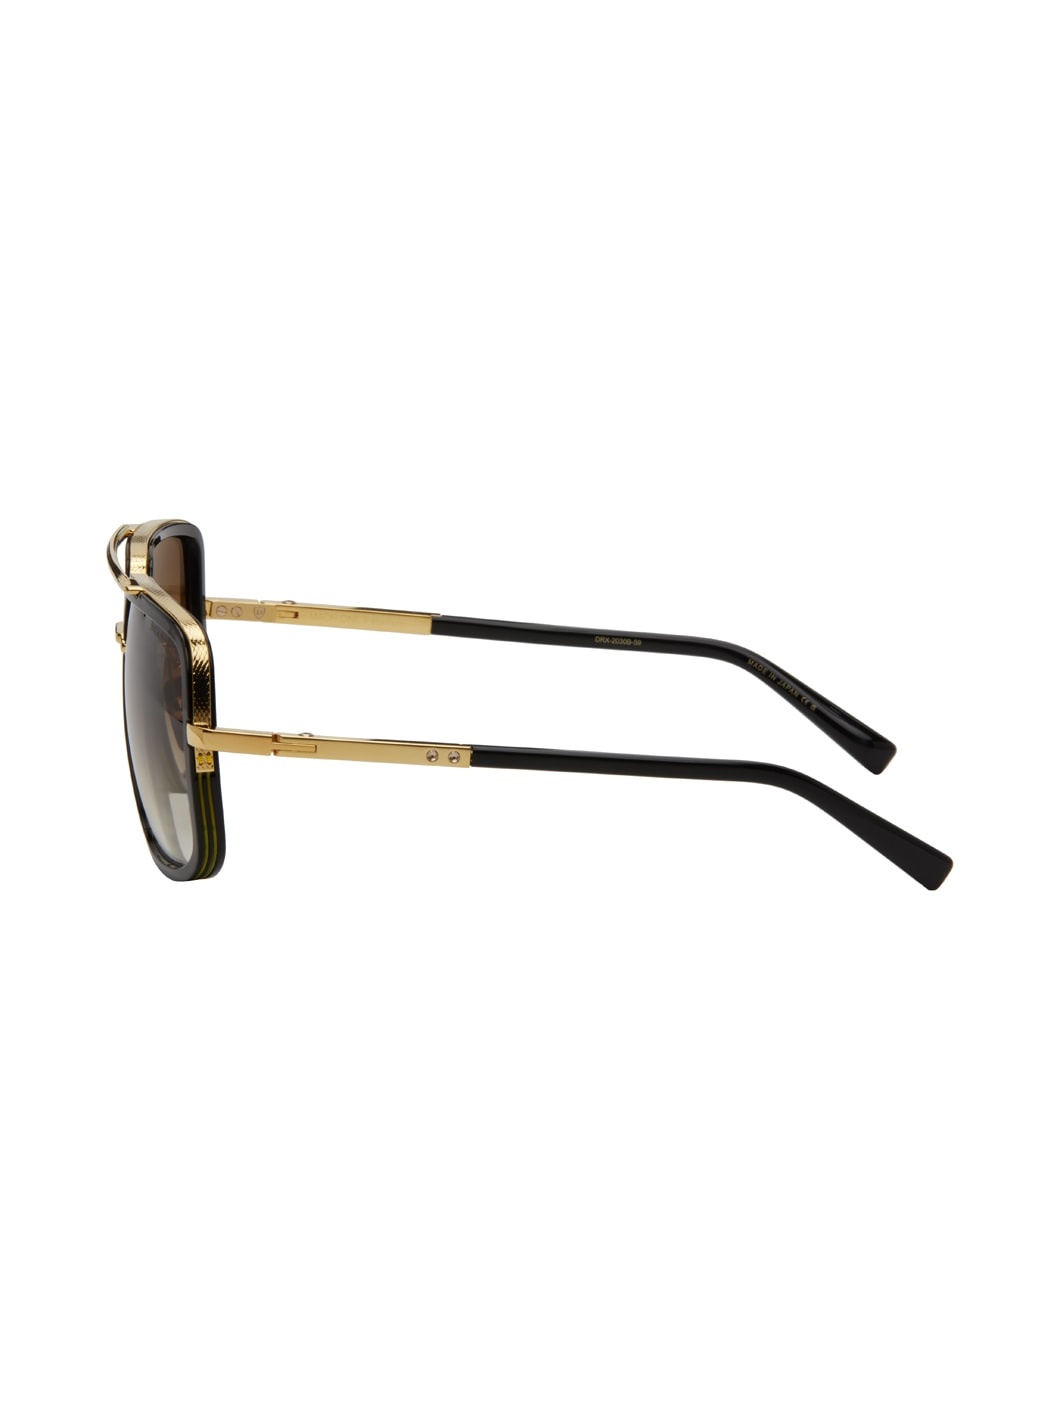 Black & Gold Mach-One Sunglasses - 3